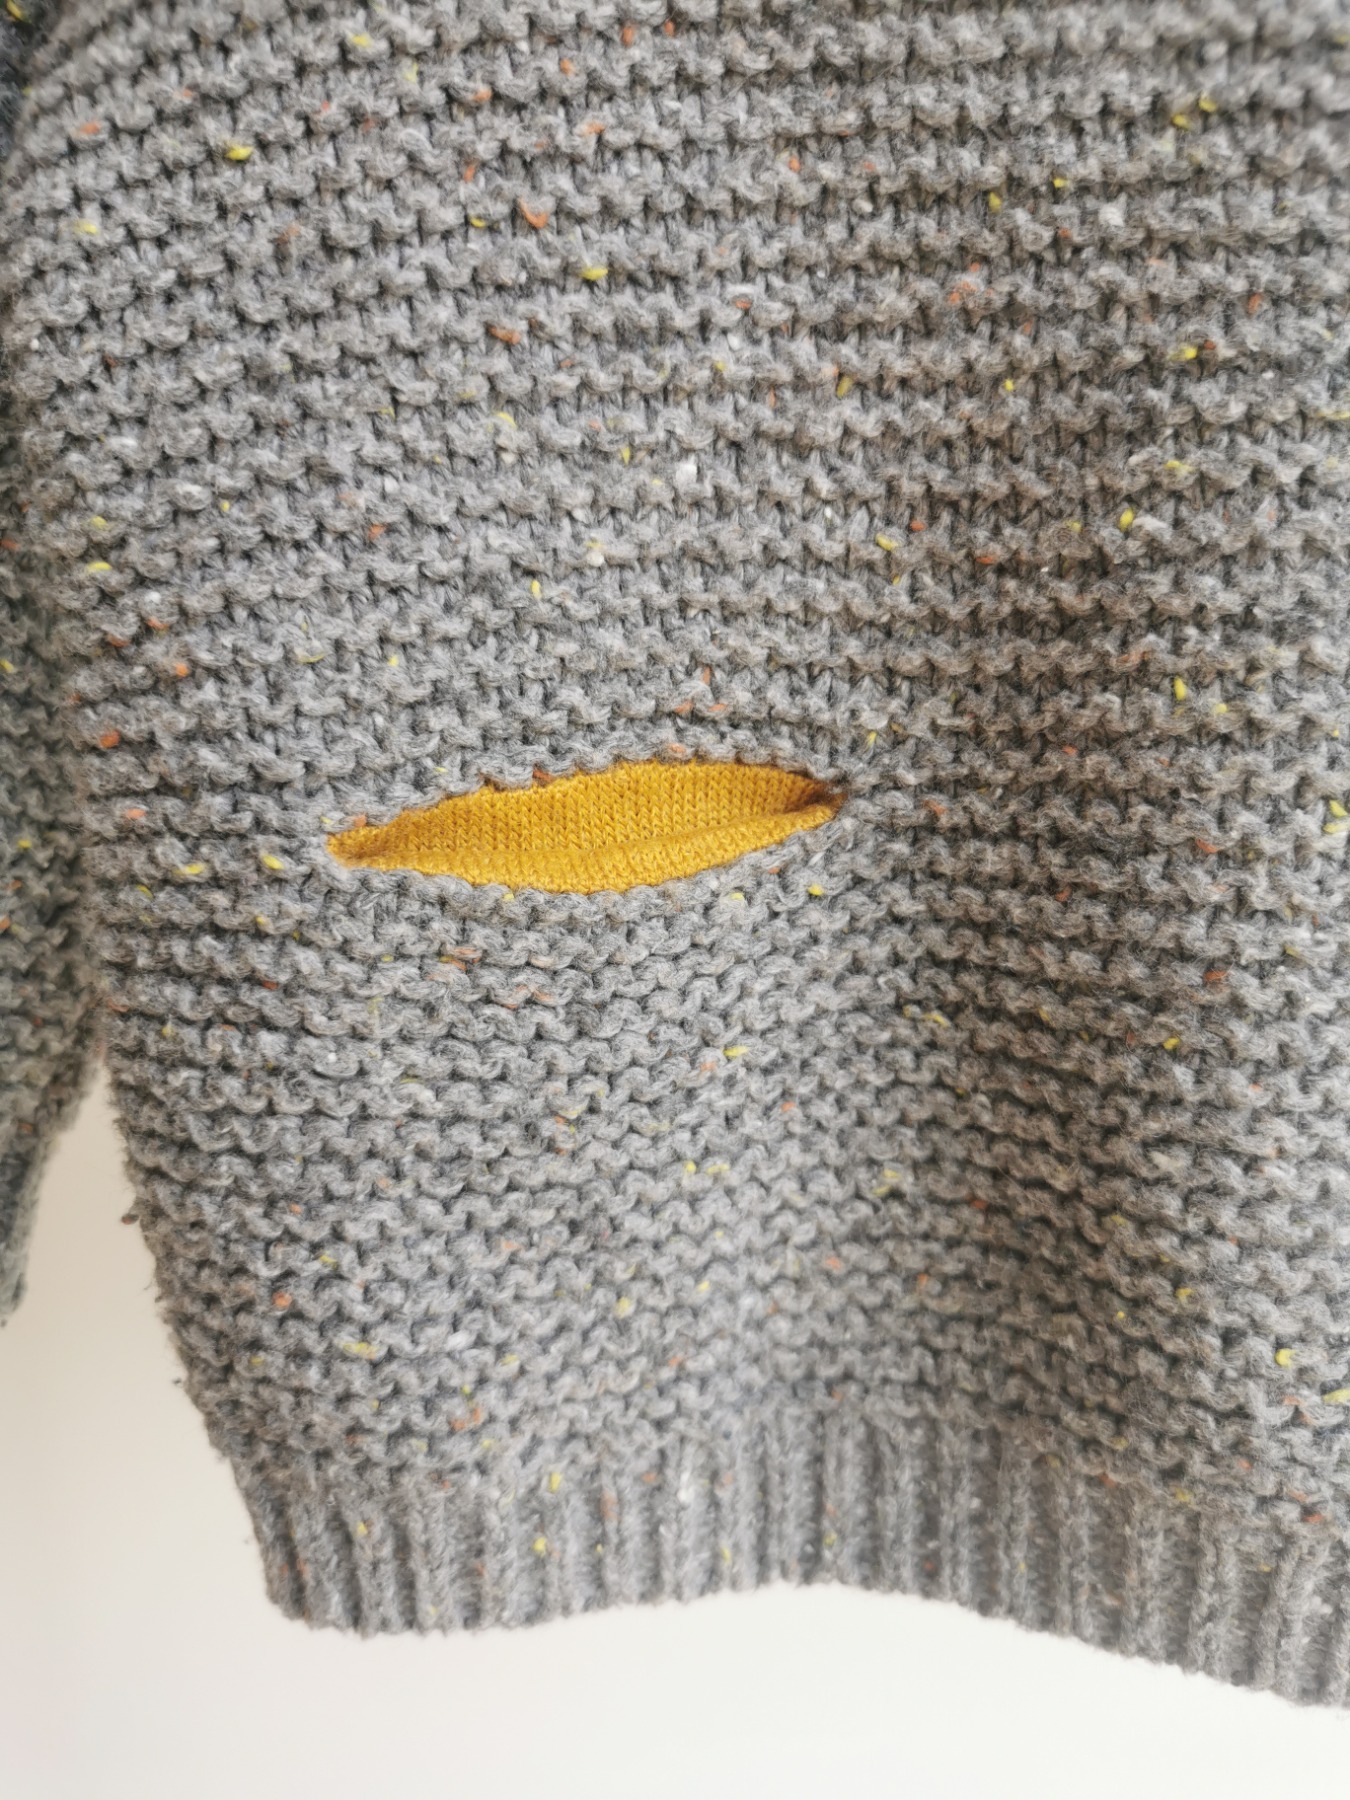 Grobstrick-Pullover - Größe 80 3